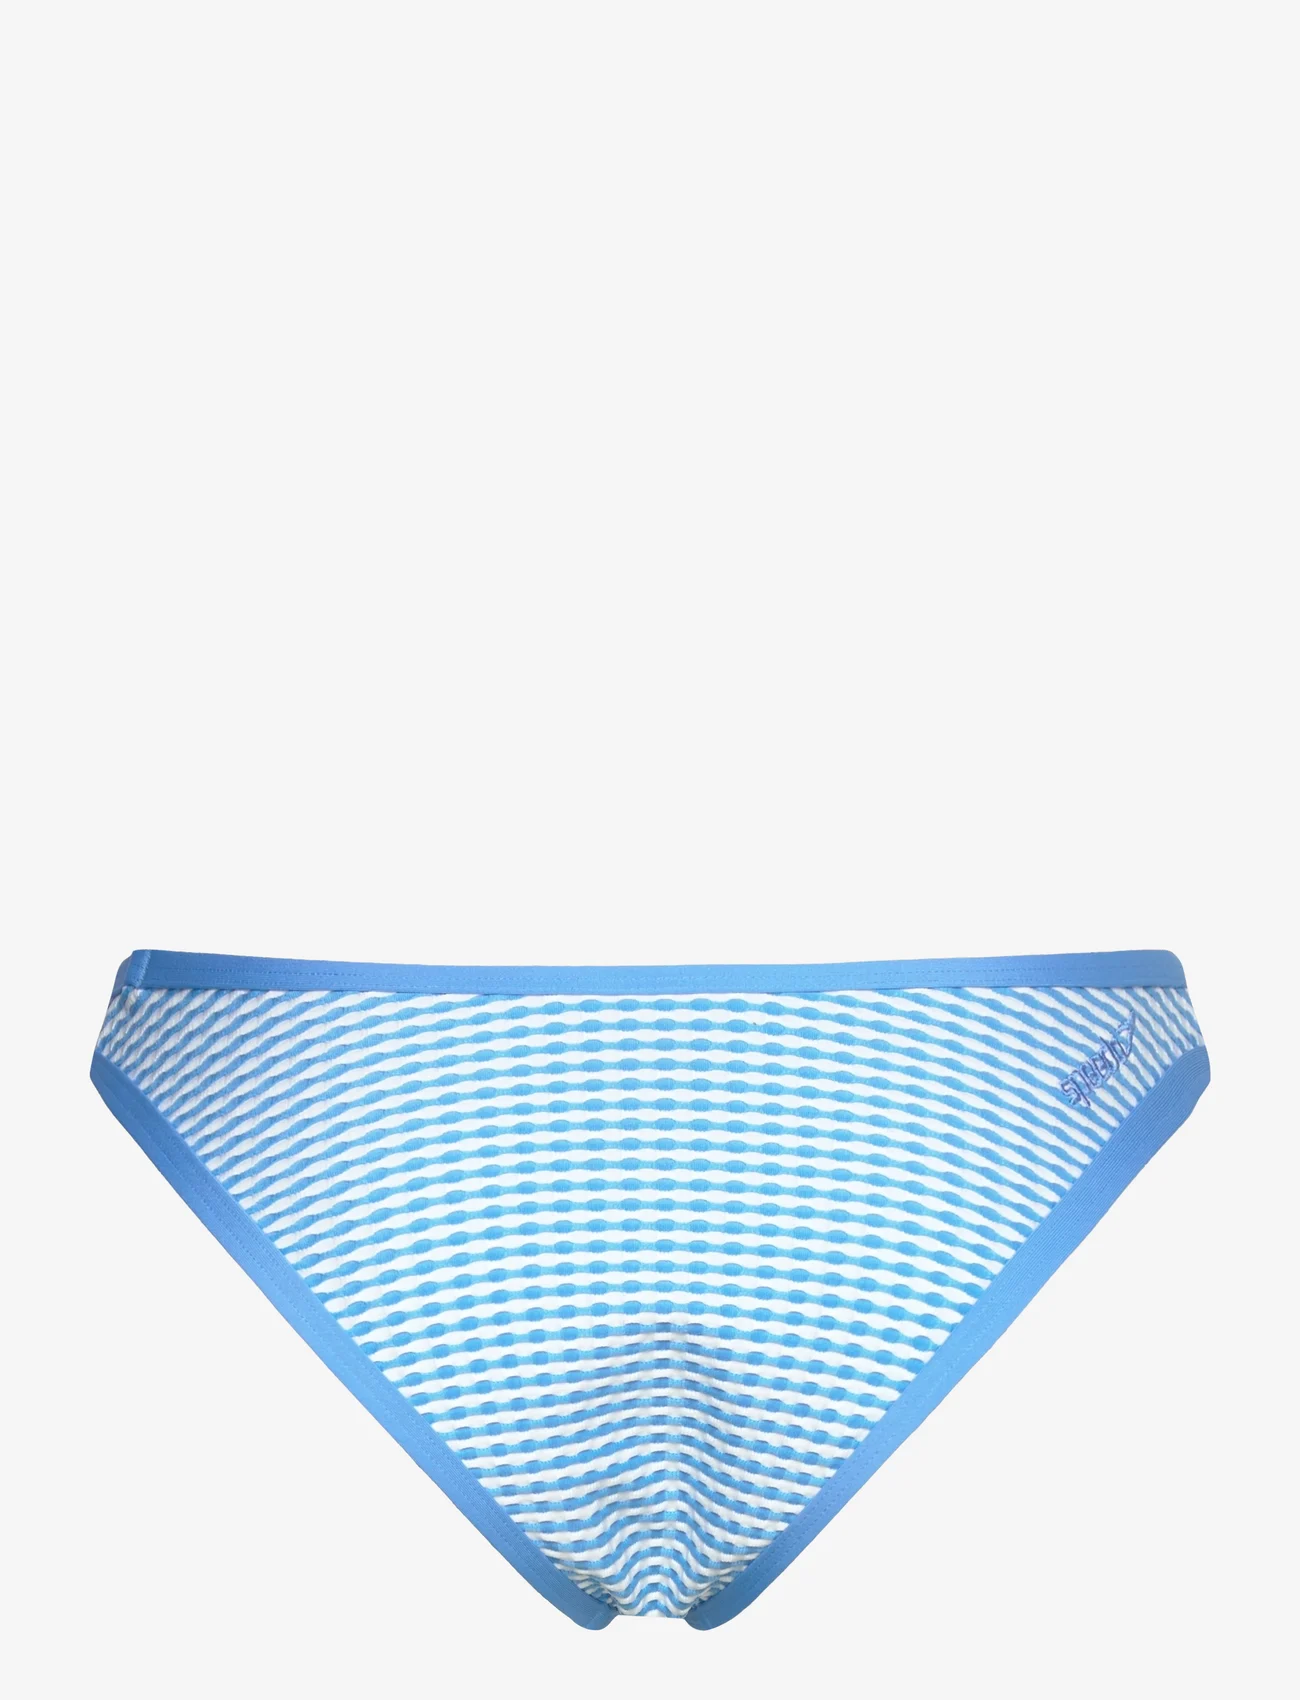 Speedo - GINGHAM SCOOP BOTTOM - bikini briefs - blue - 1